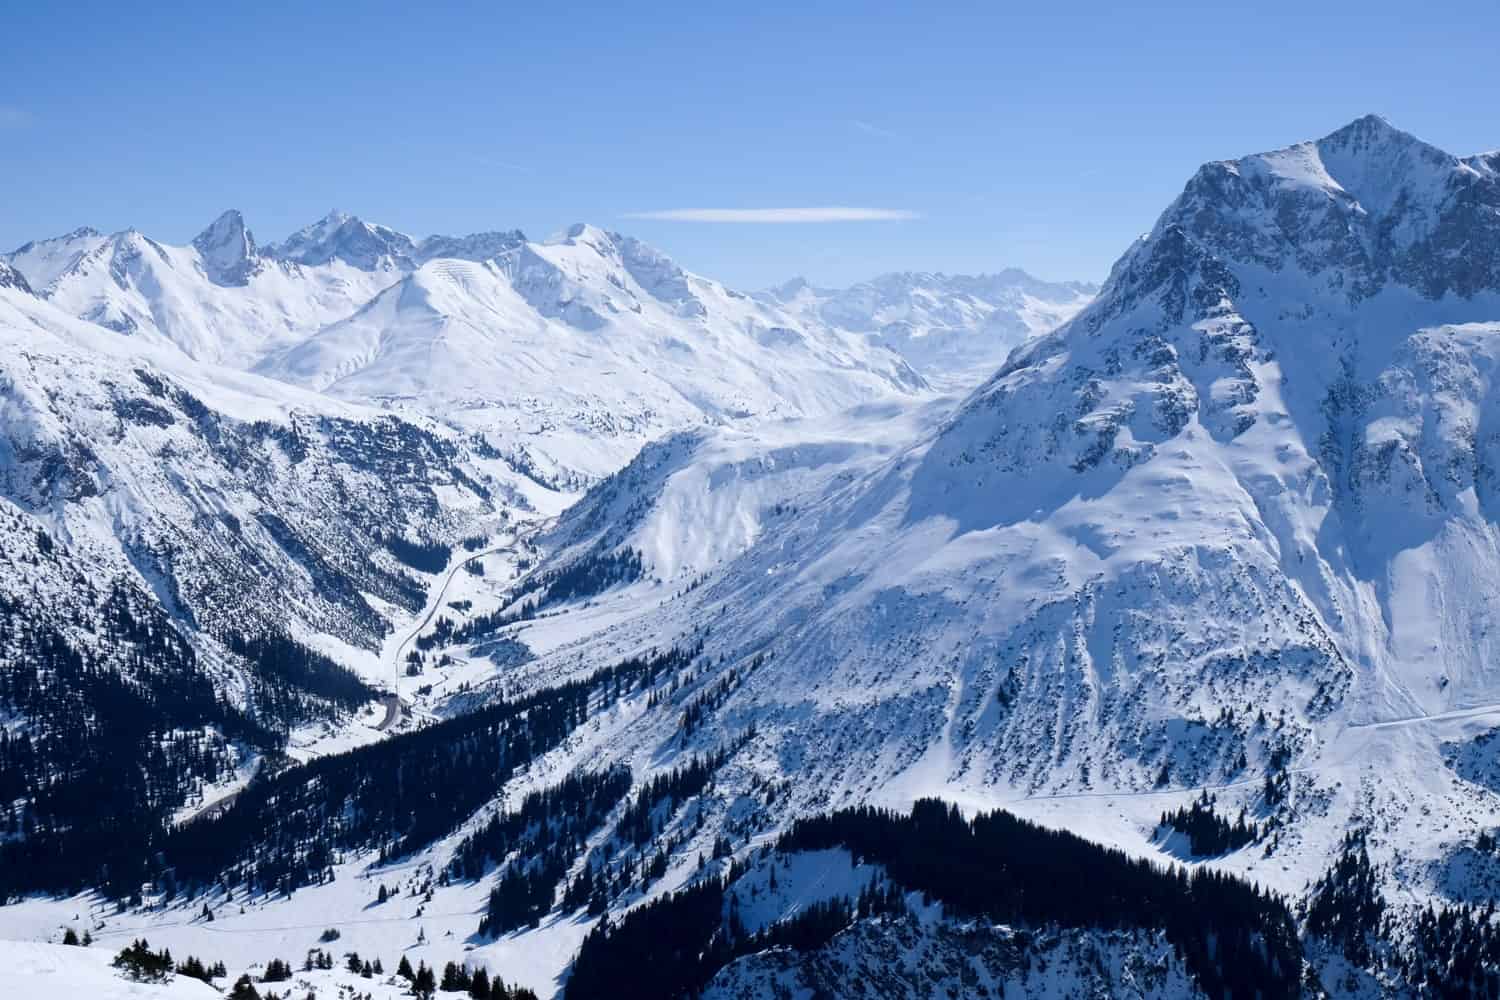 Mountain backdrop to Skiing in Lech Zürs am Arlberg Austria